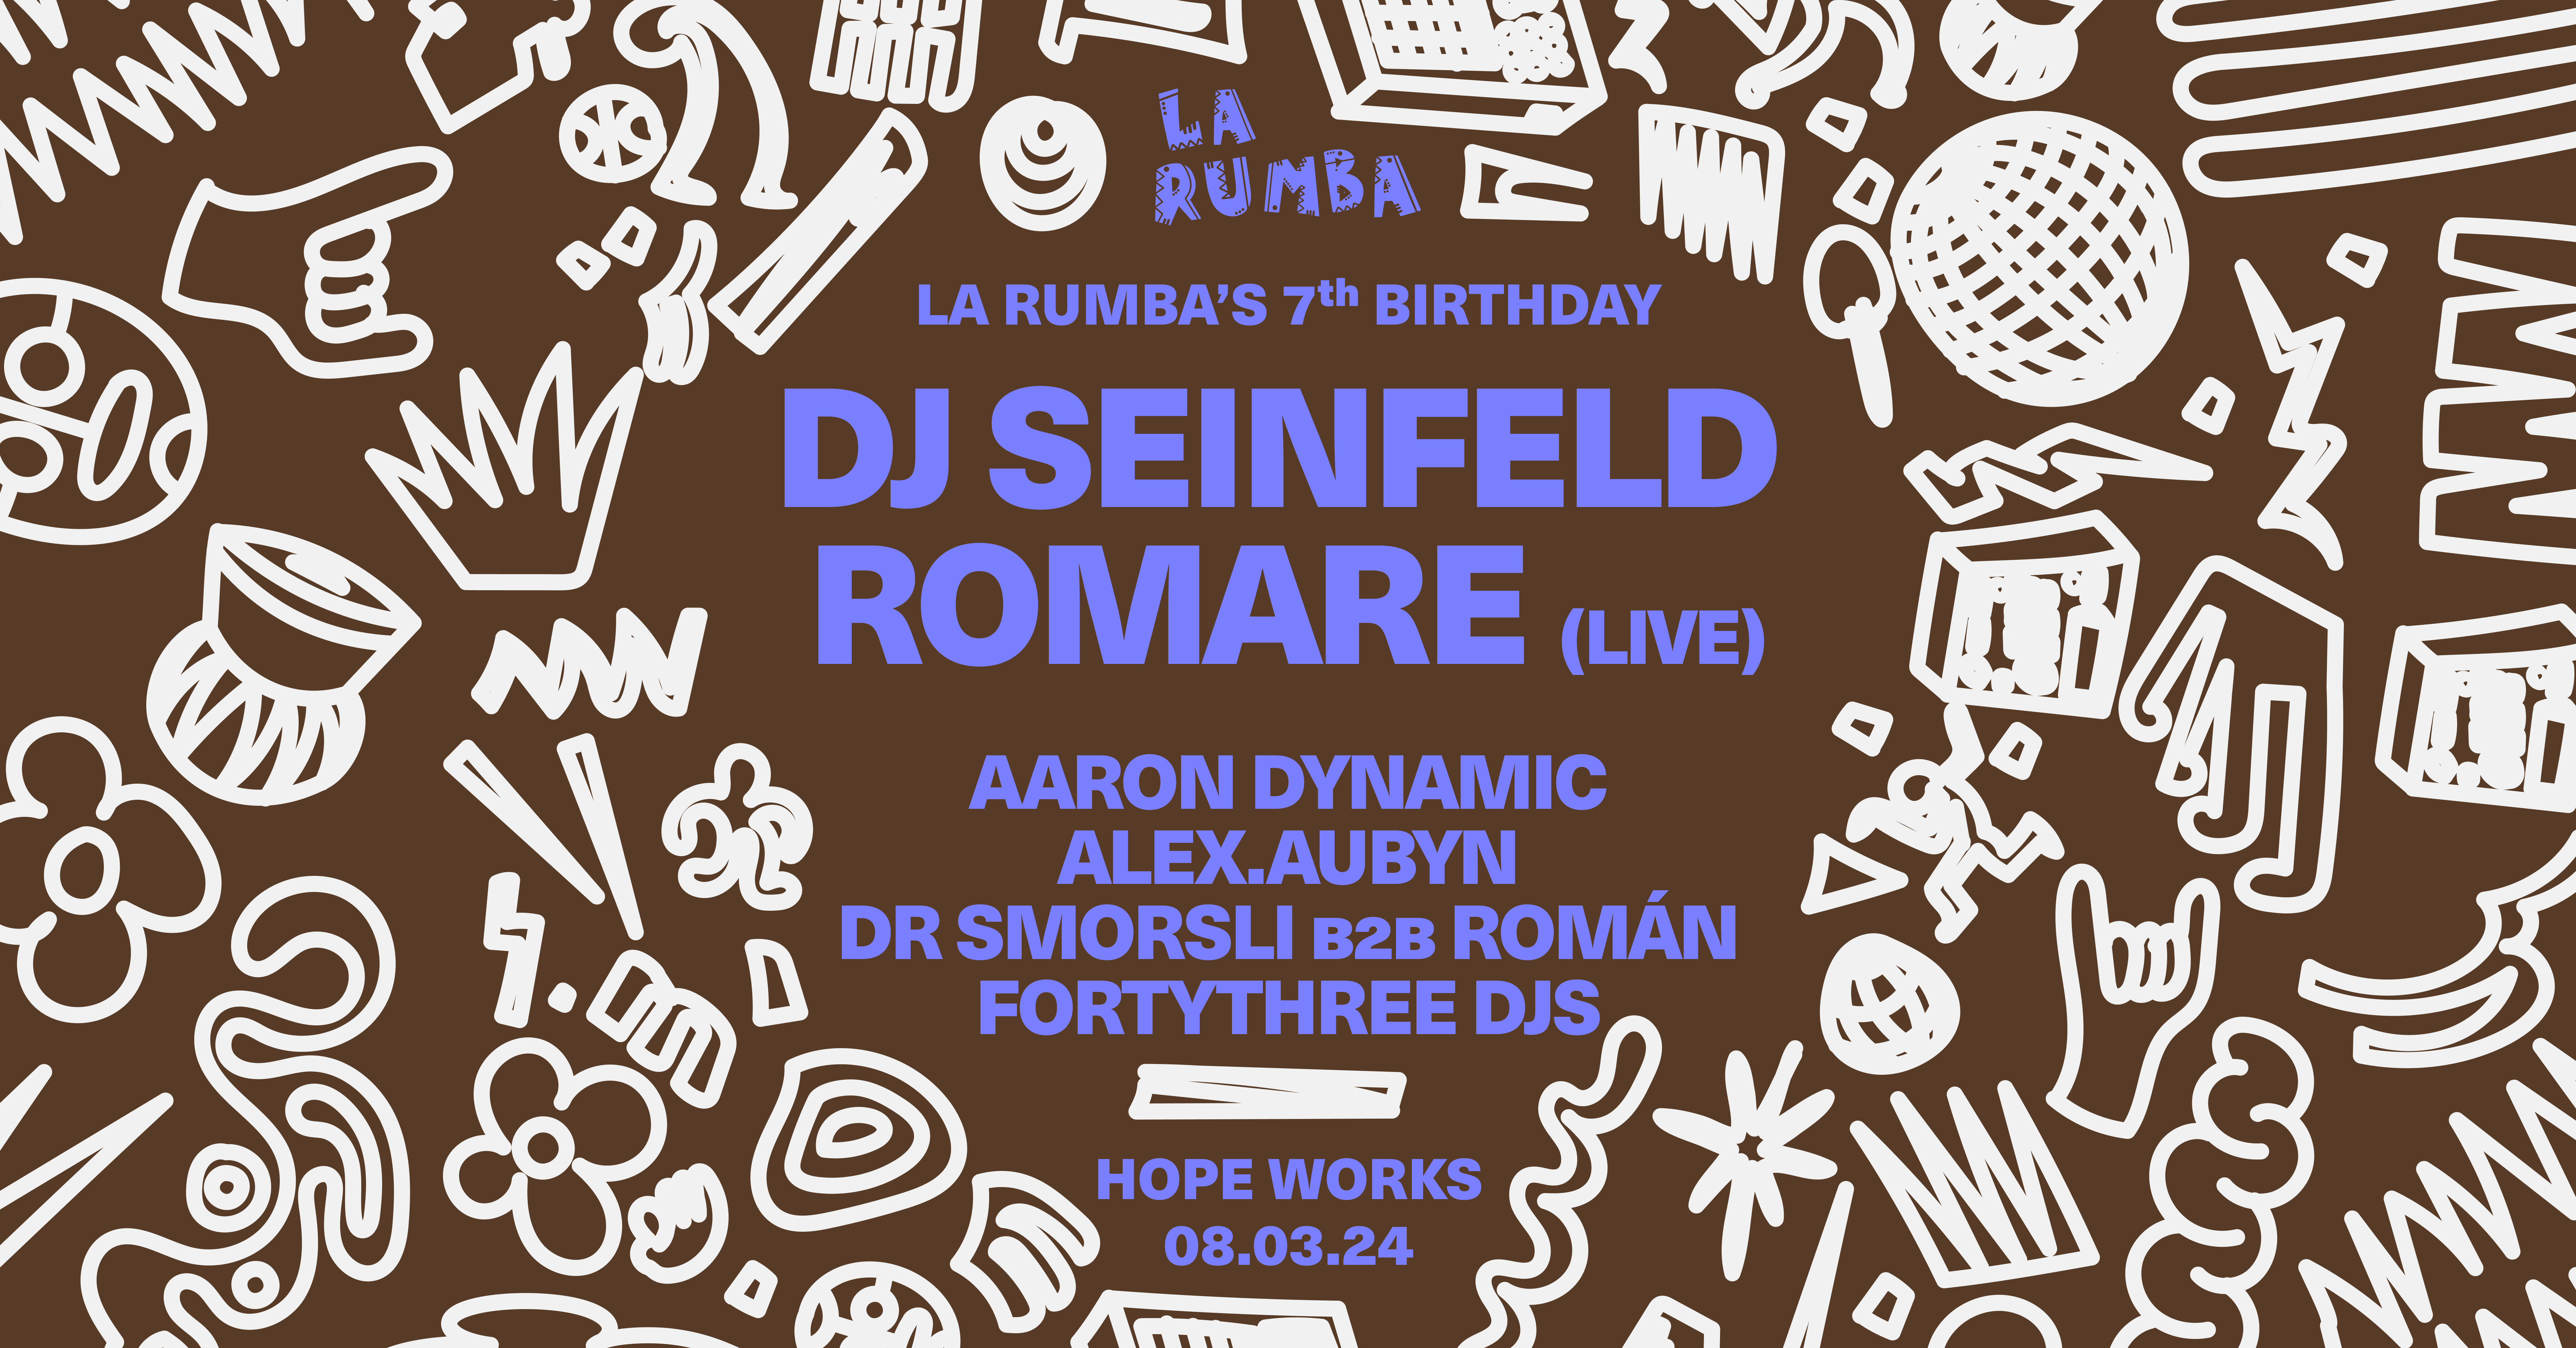 La Rumba's 7th Birthday: DJ Seinfeld, Romare (live), Dr Smorsli b2b Román + more - Página frontal